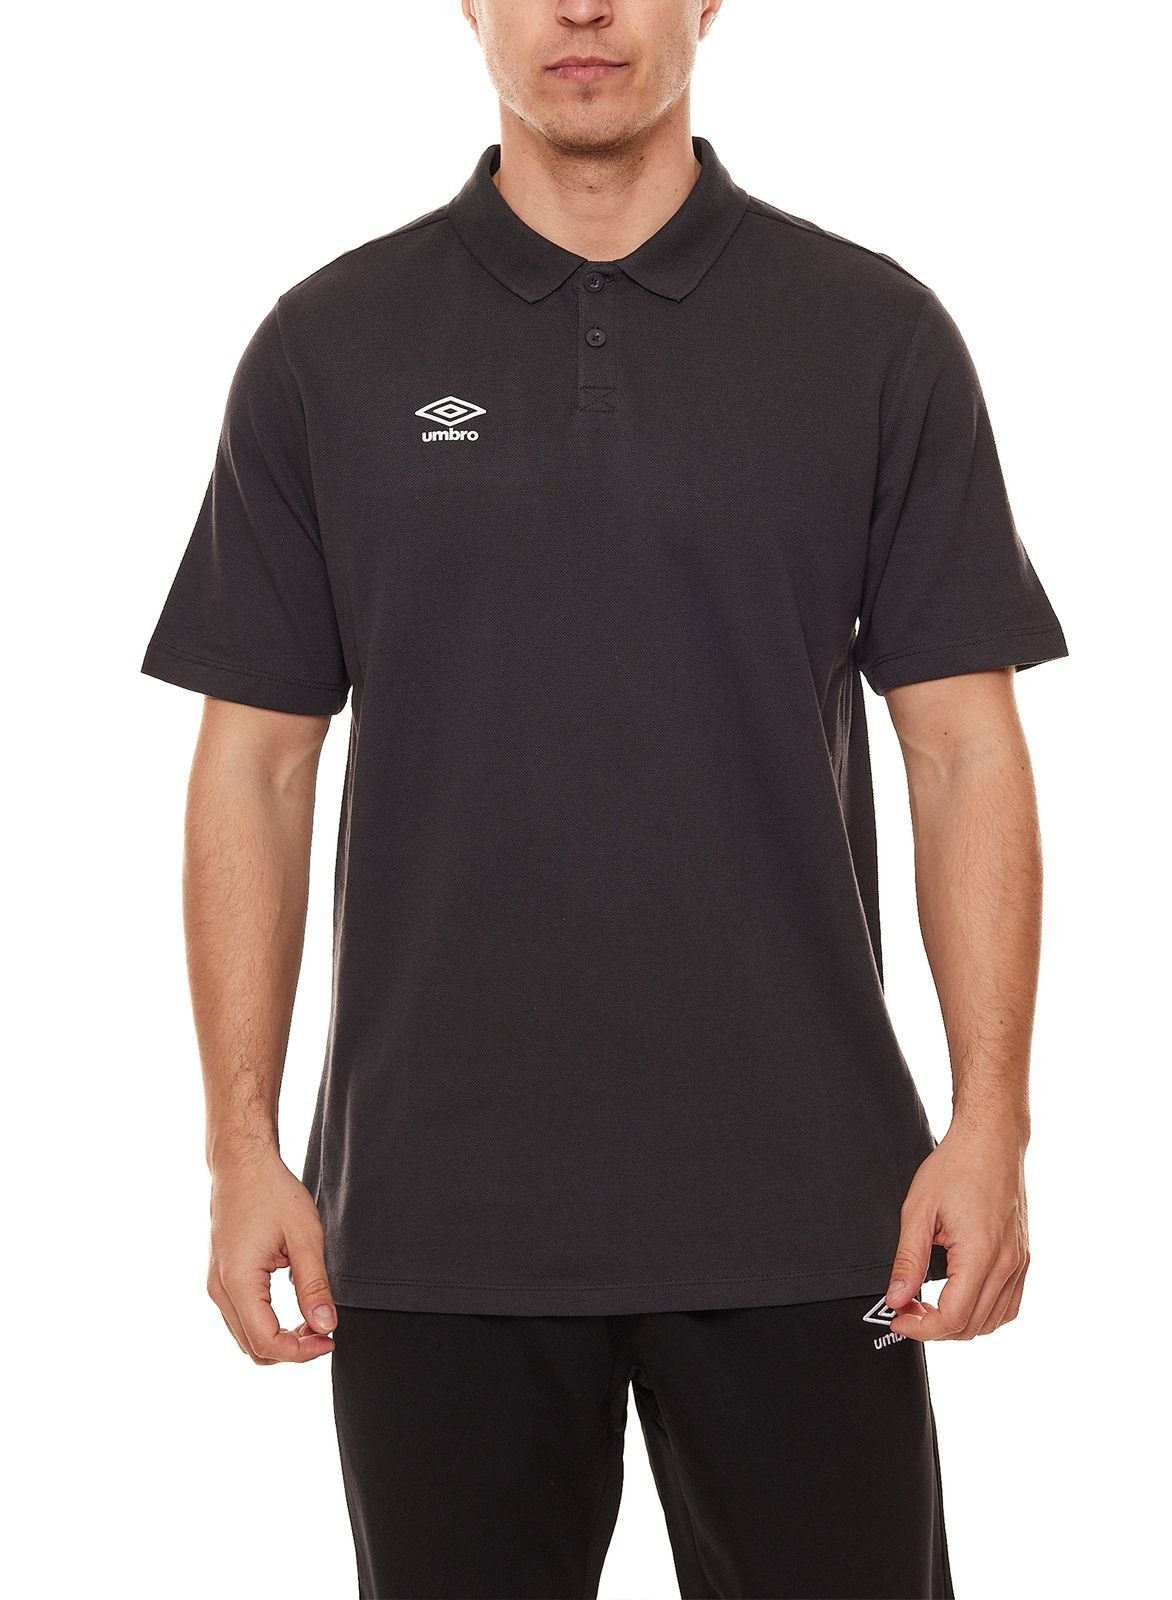 Polo-Shirt UMTM0323-825 Golf-Shirt Herren Dunkelgrau komfortables Polohemd Club Essential Rundhalsshirt Umbro umbro